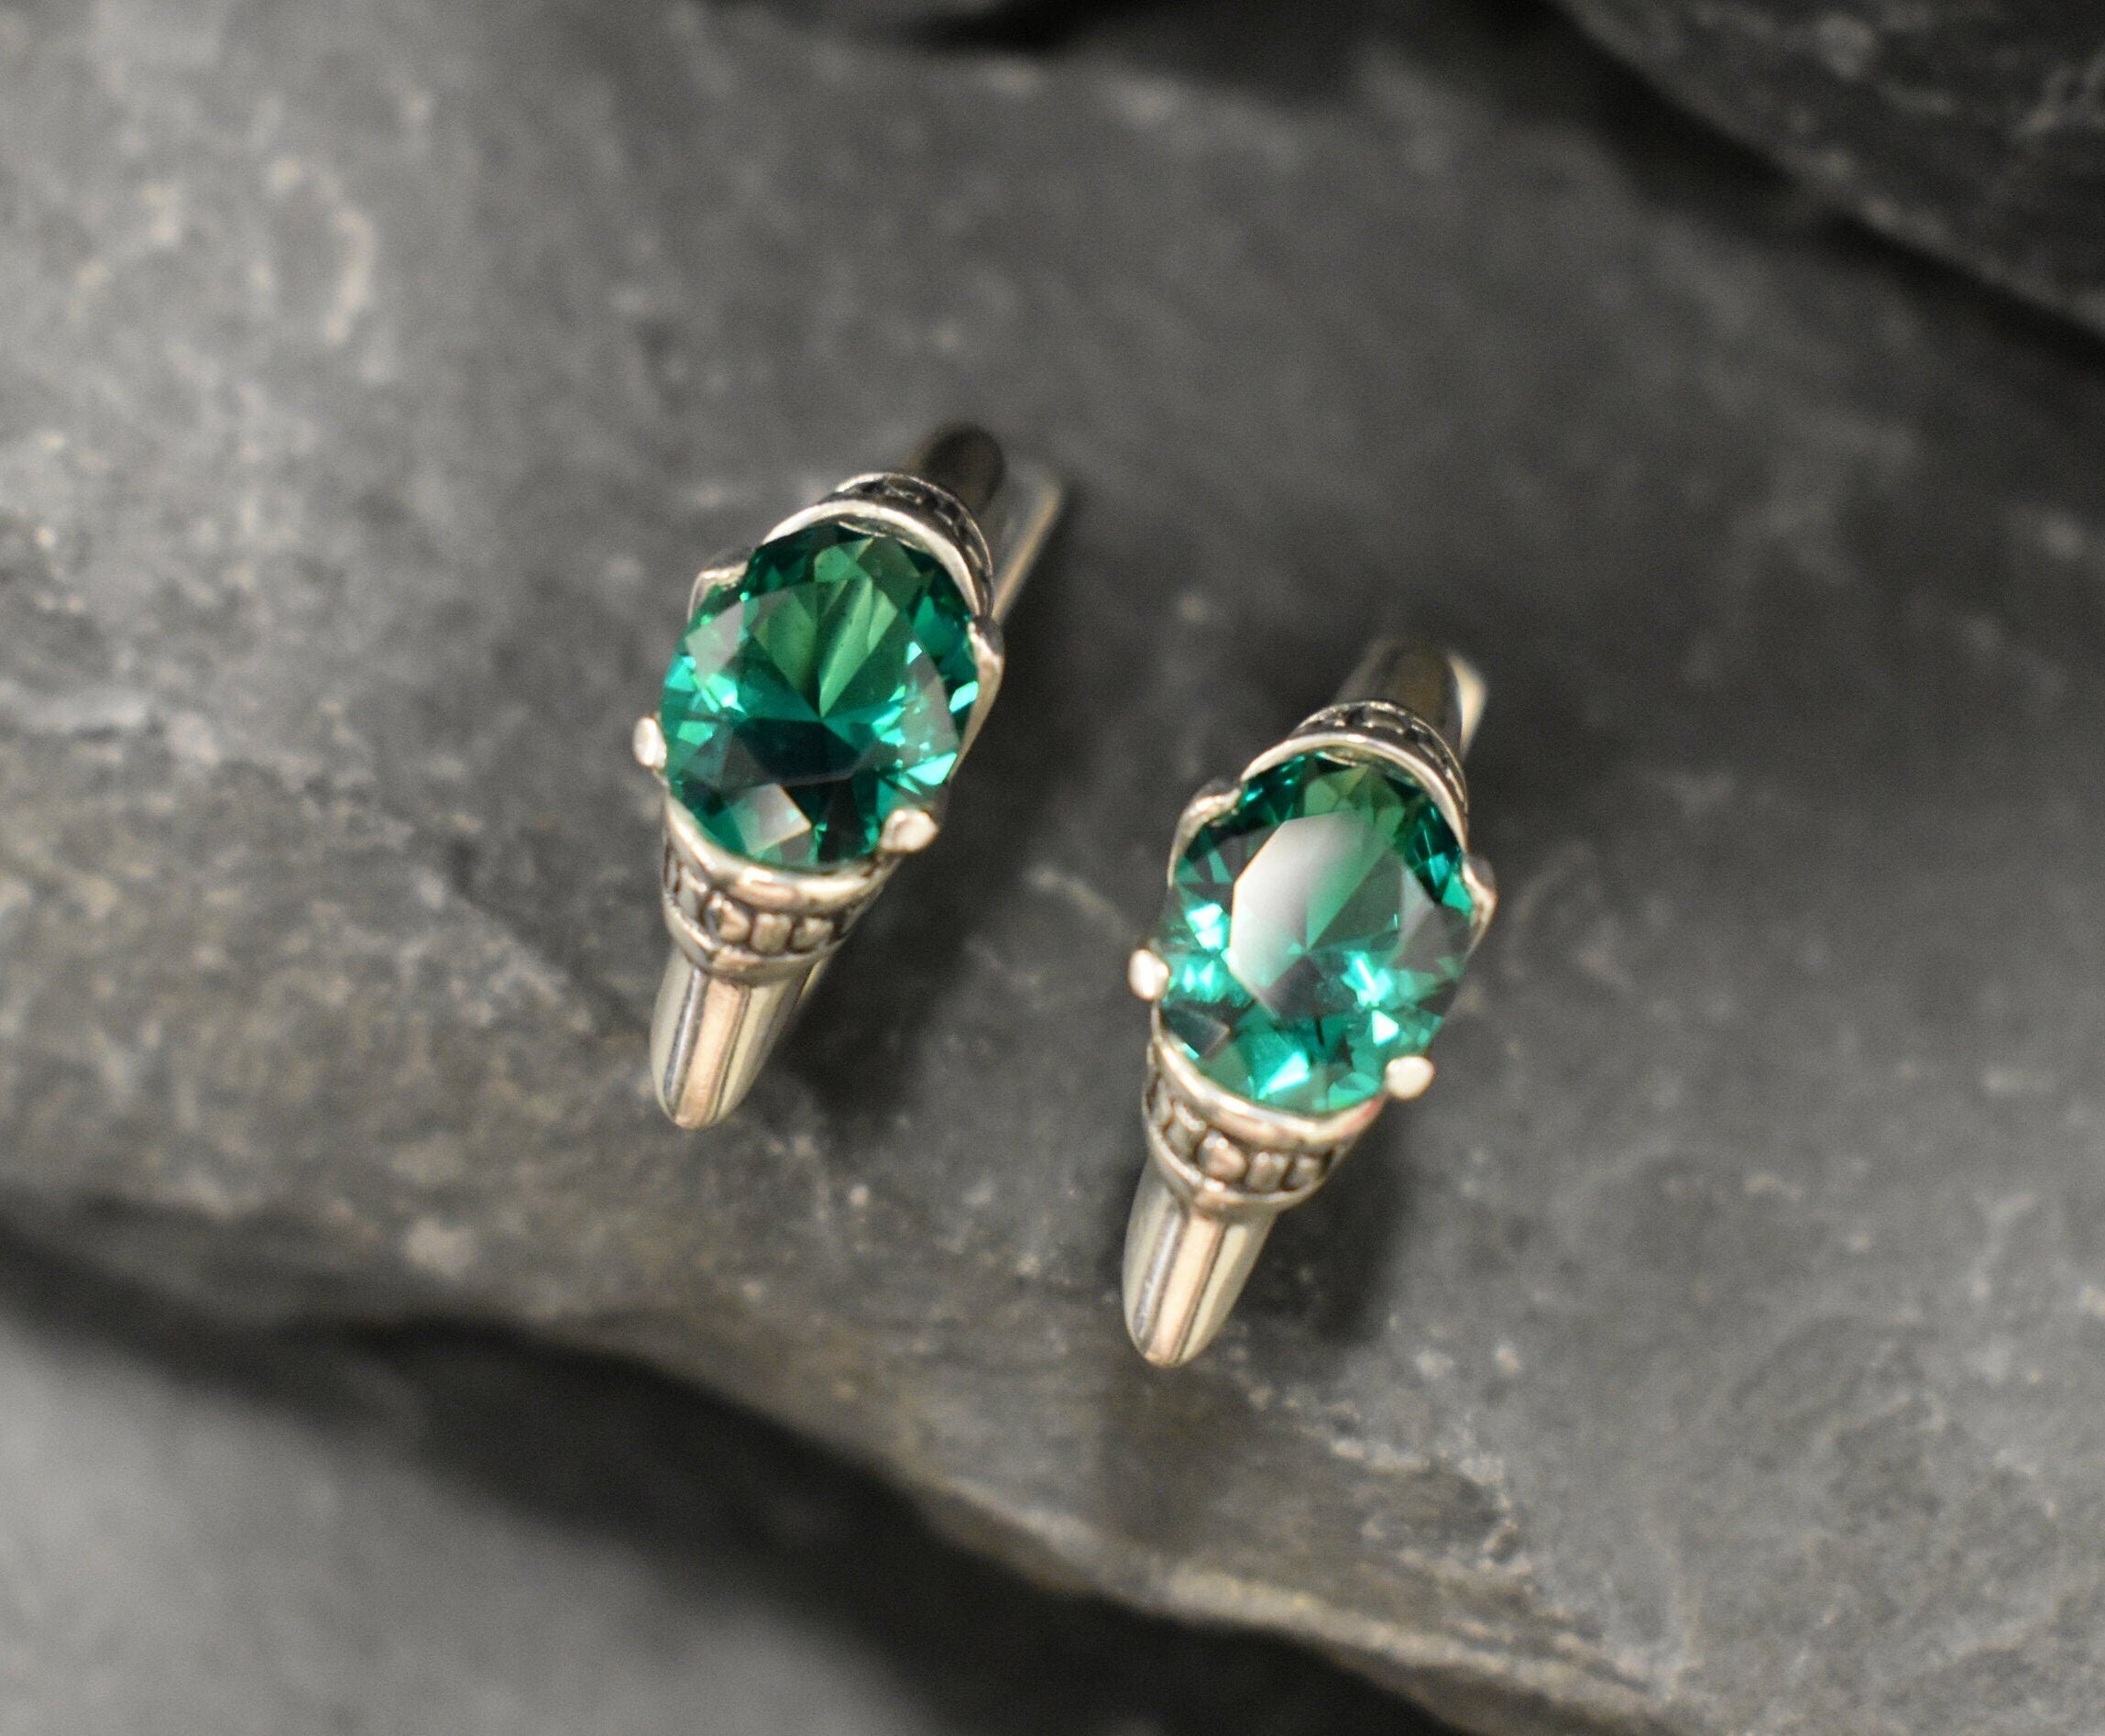 Emerald Earrings, Created Emerald, Vintage Earrings, Emerald Studs, Large Stud Earrings, Boho Earrings, Green Studs, Solid Silver Earrings